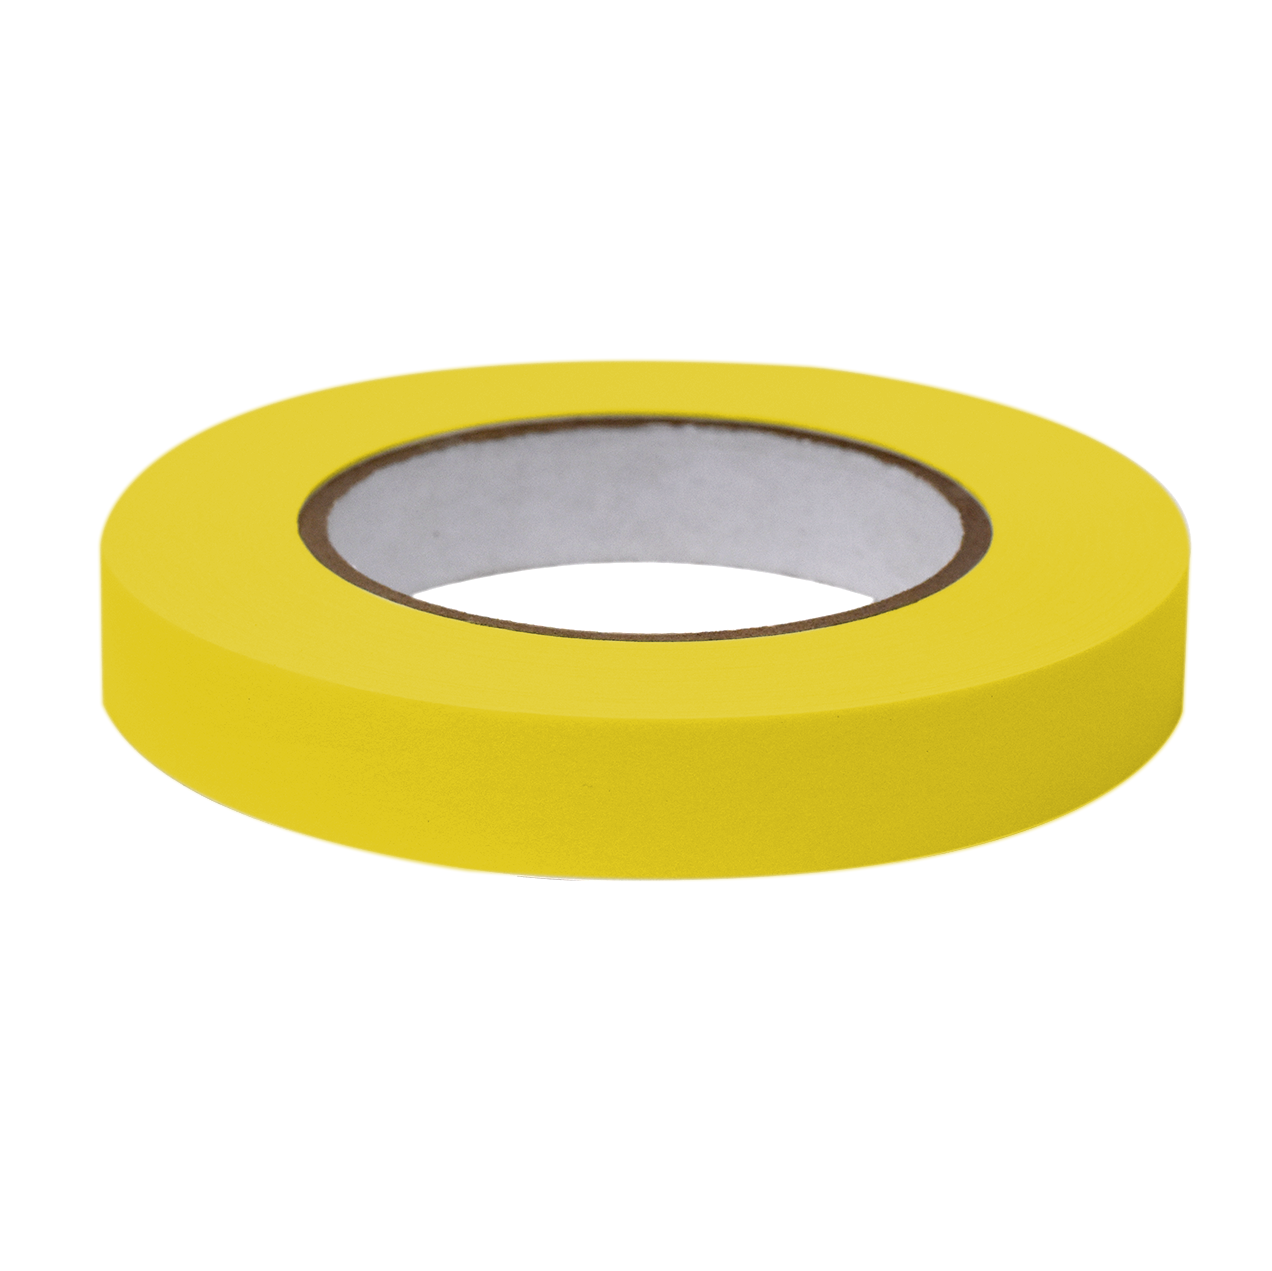 Globe Scientific Labeling Tape, 3/4" x 60yd per Roll, 4 Rolls/Case, Yellow  